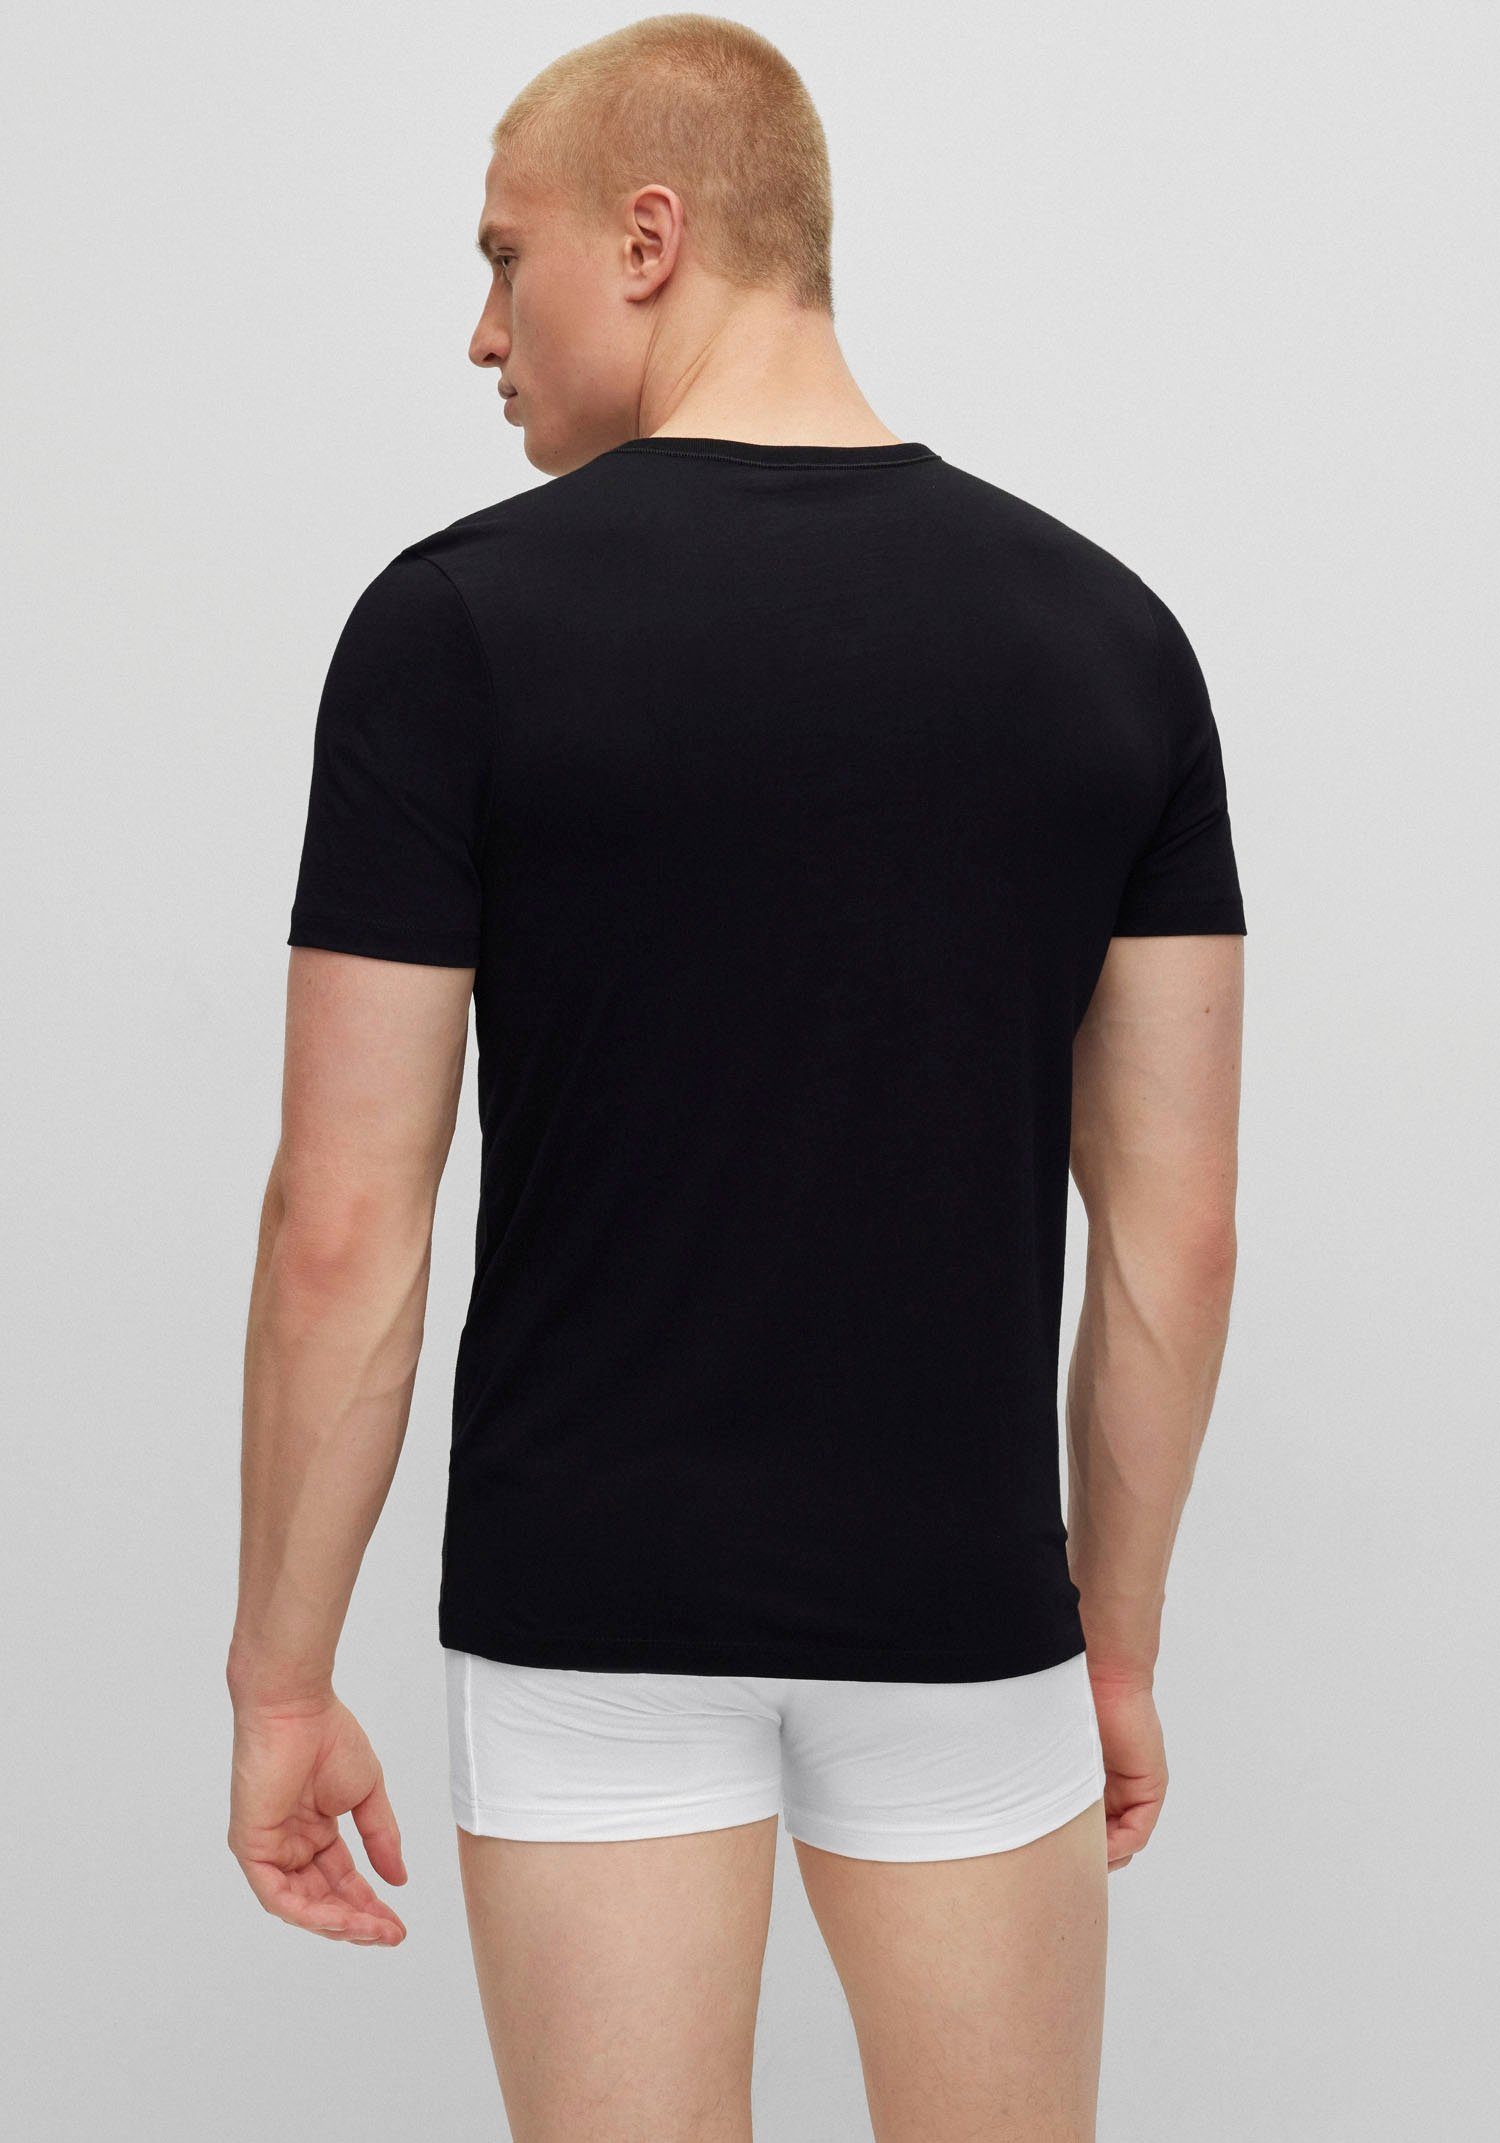 BOSS V-Shirt T-Shirt VN 3P CO (Packung) black